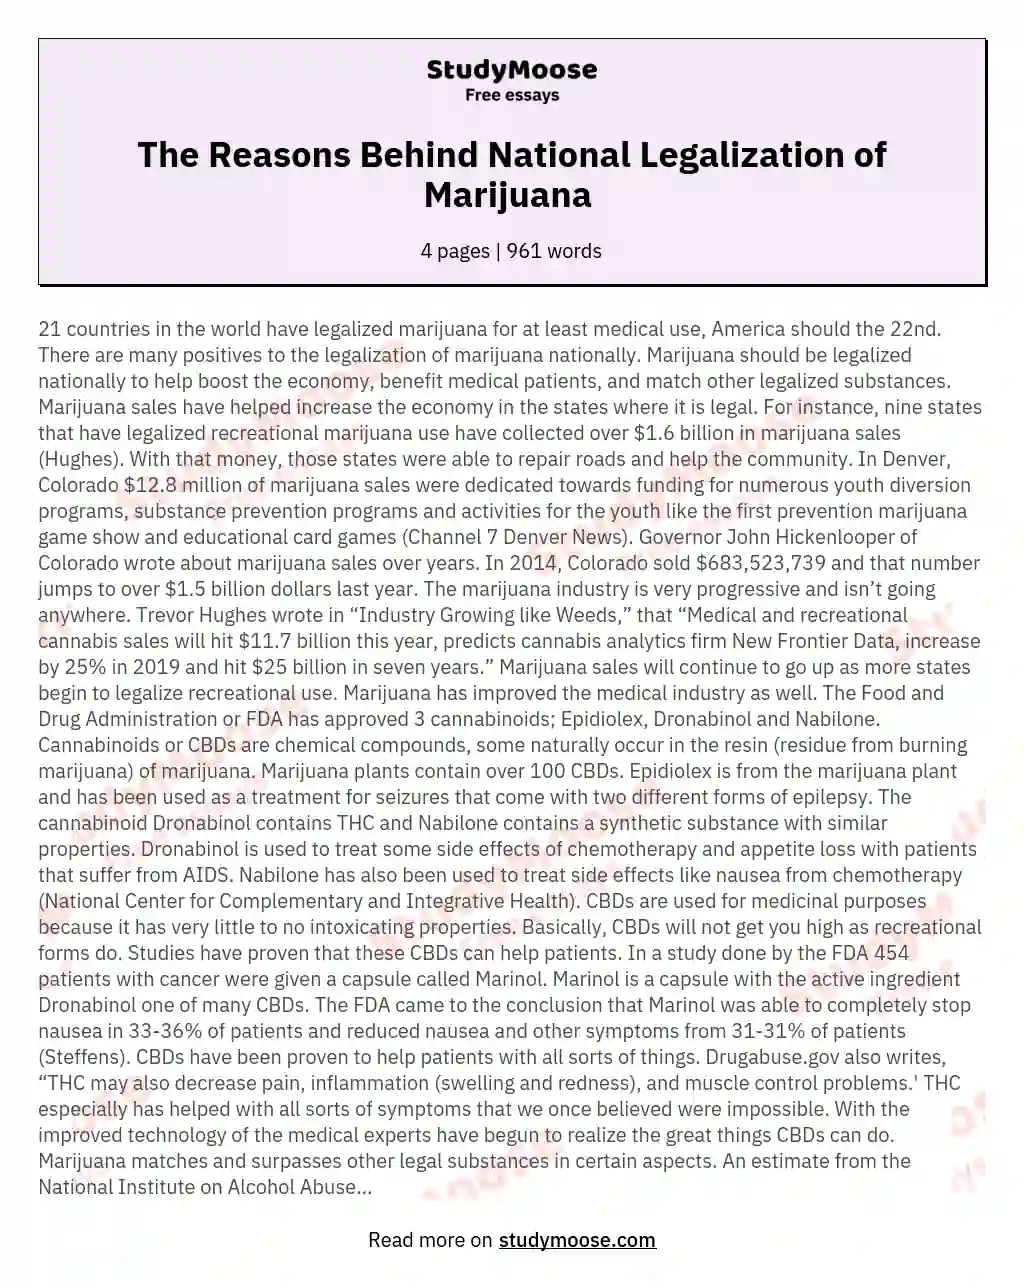 The Reasons Behind National Legalization of Marijuana  essay